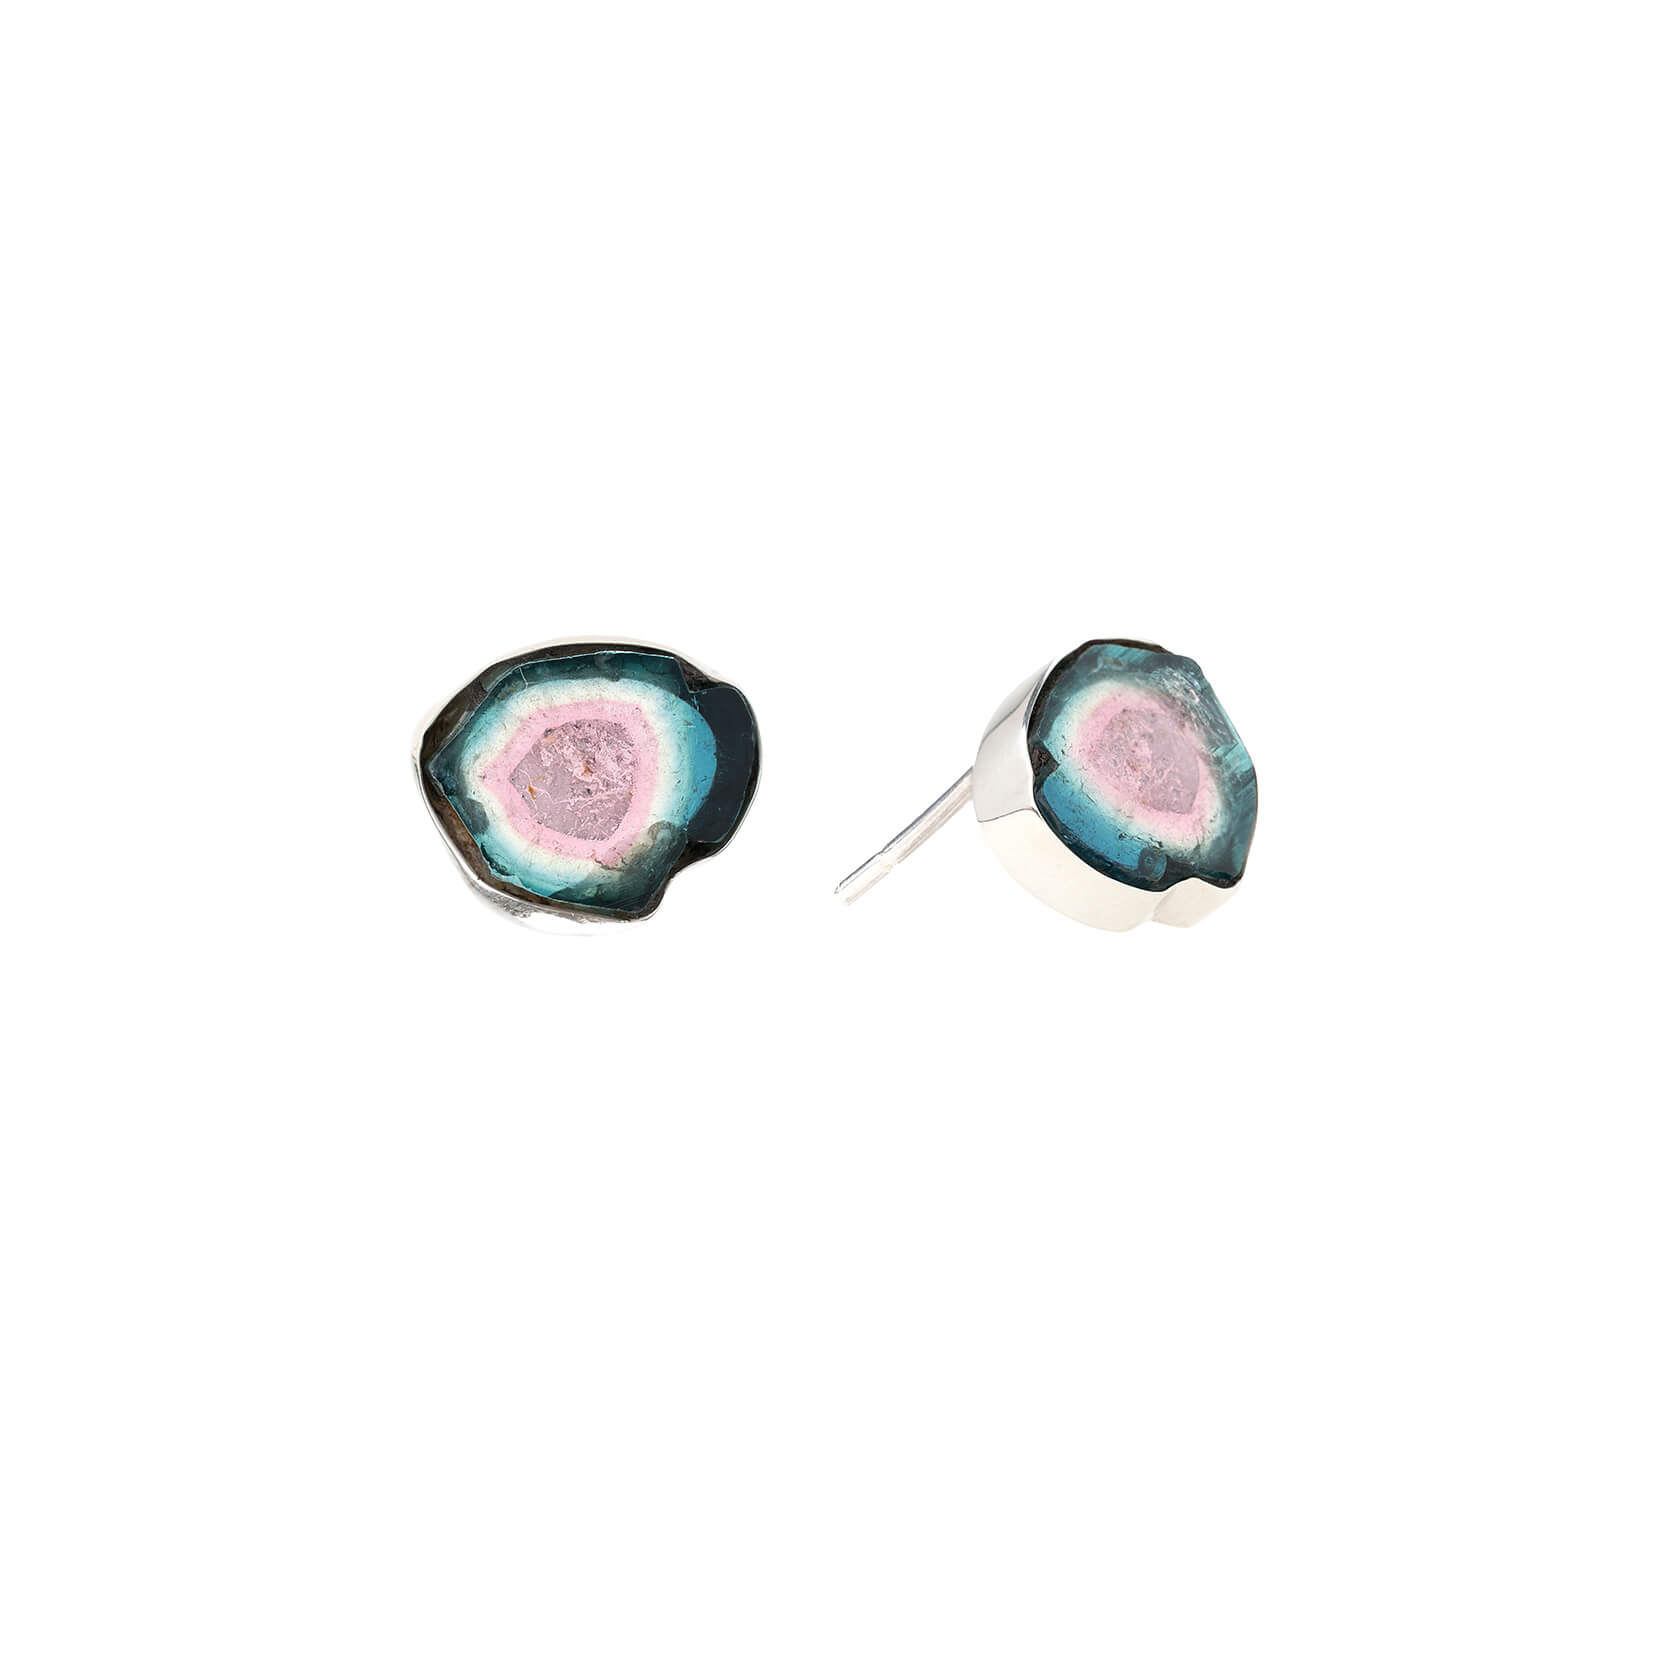 Watermelon tourmaline earrings Marybola